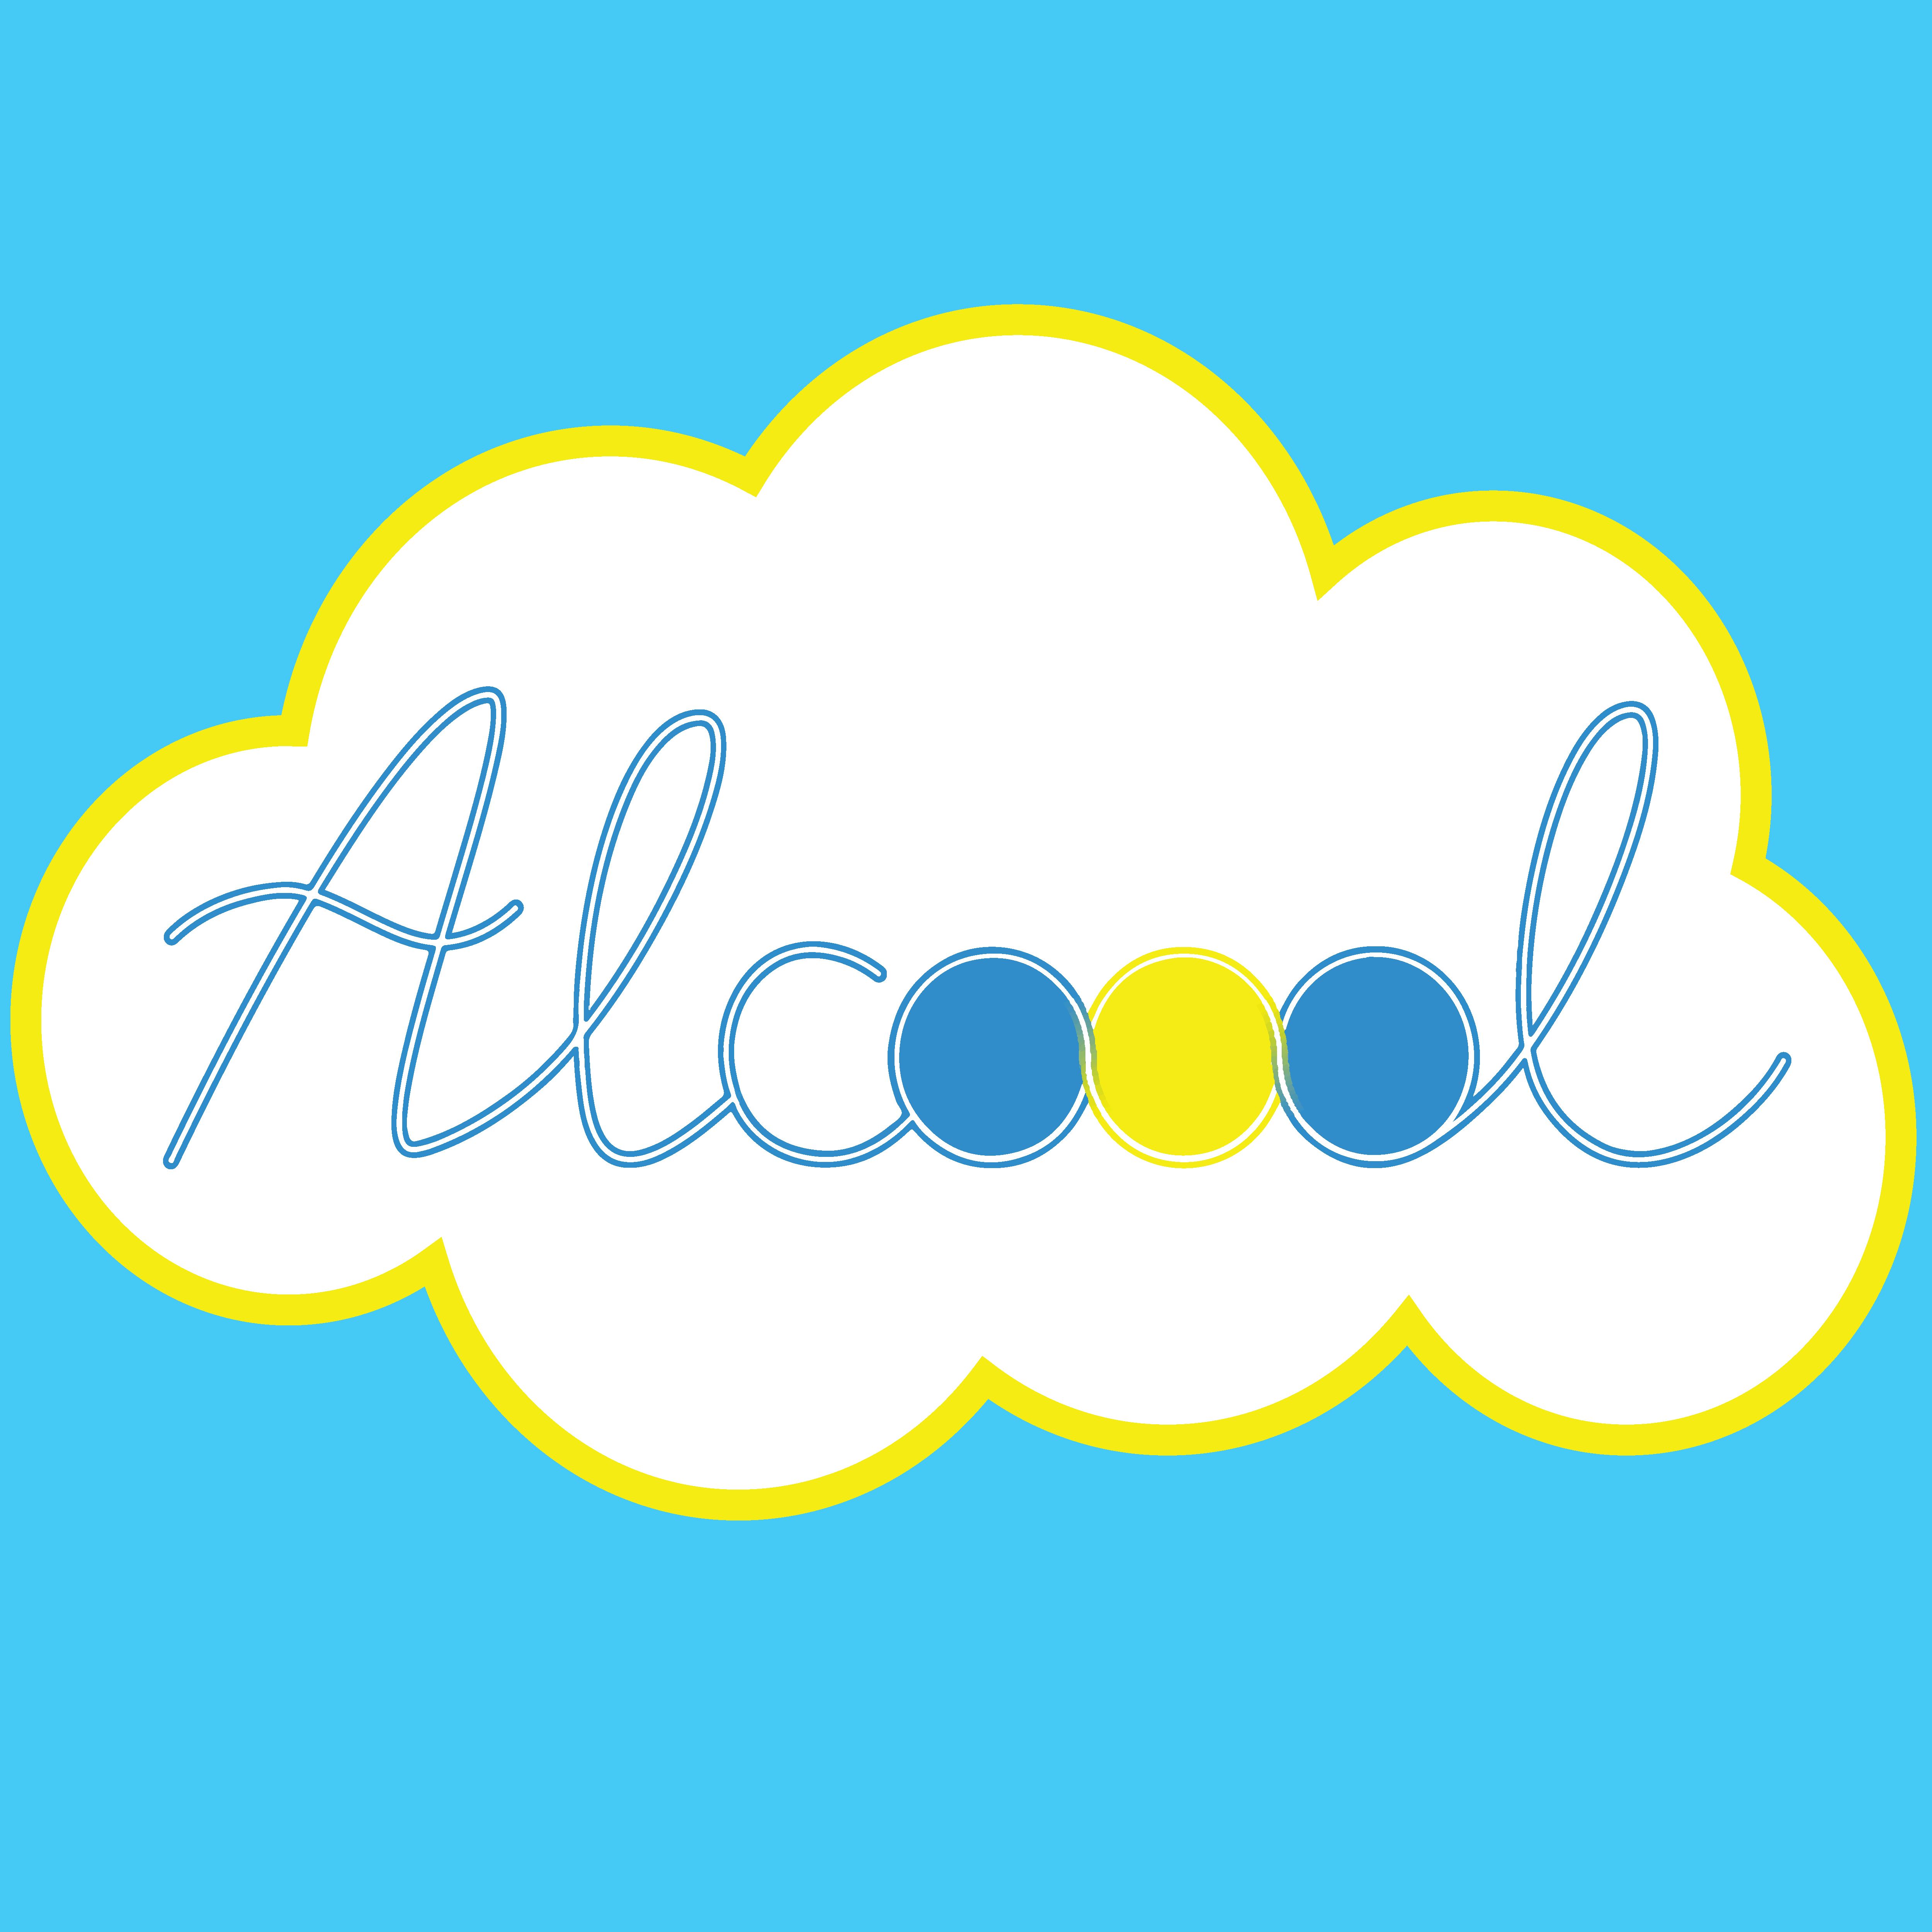 Alcoool